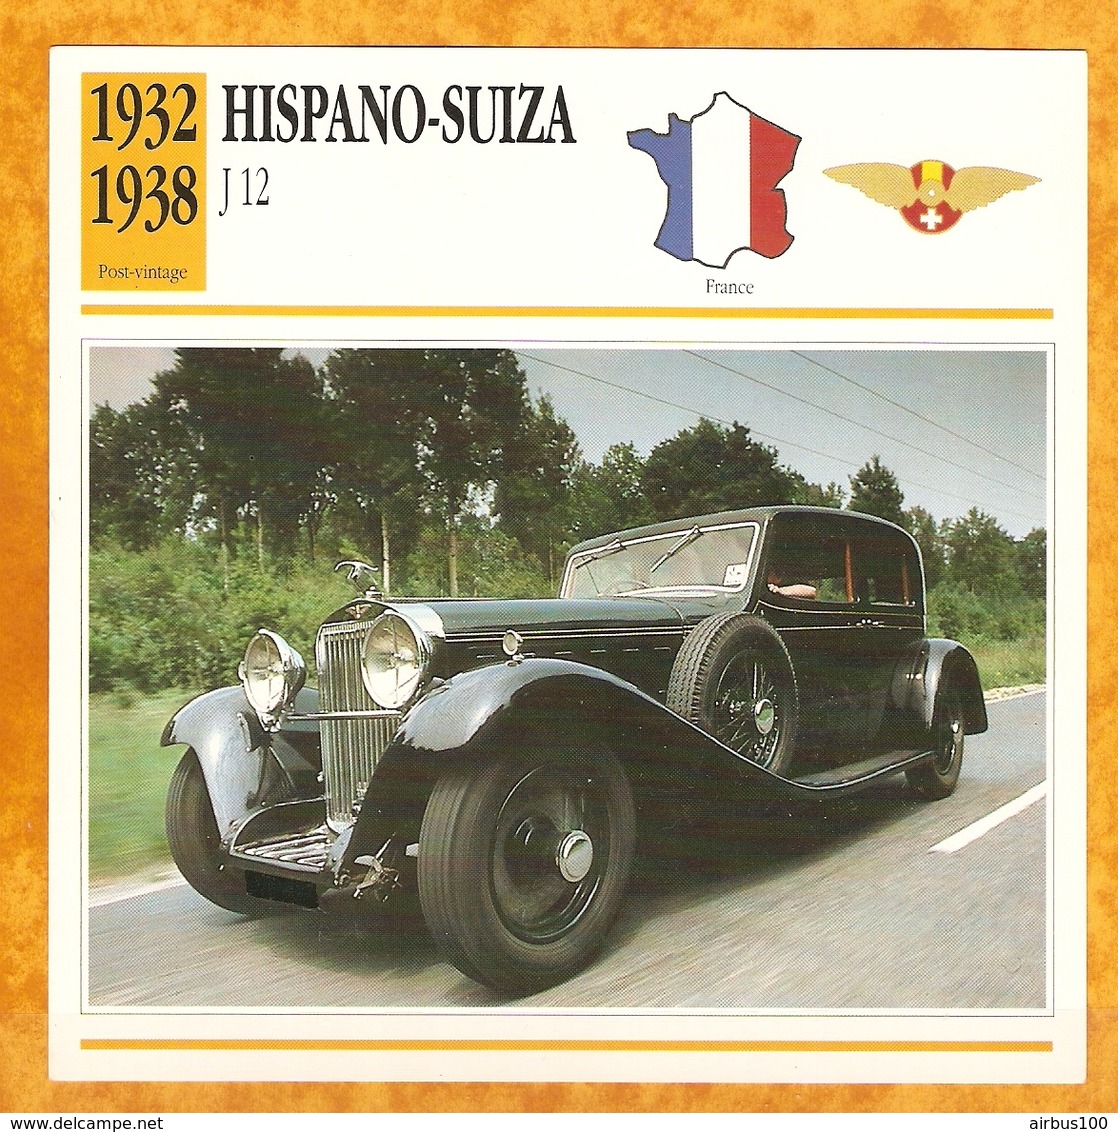 1932 FRANCE VIEILLE VOITURE HISPANO SUIZA J12 J 12- FRANCE OLD CAR - FRANCIA VIEJO COCHE - VECCHIA MACCHINA - Automobili